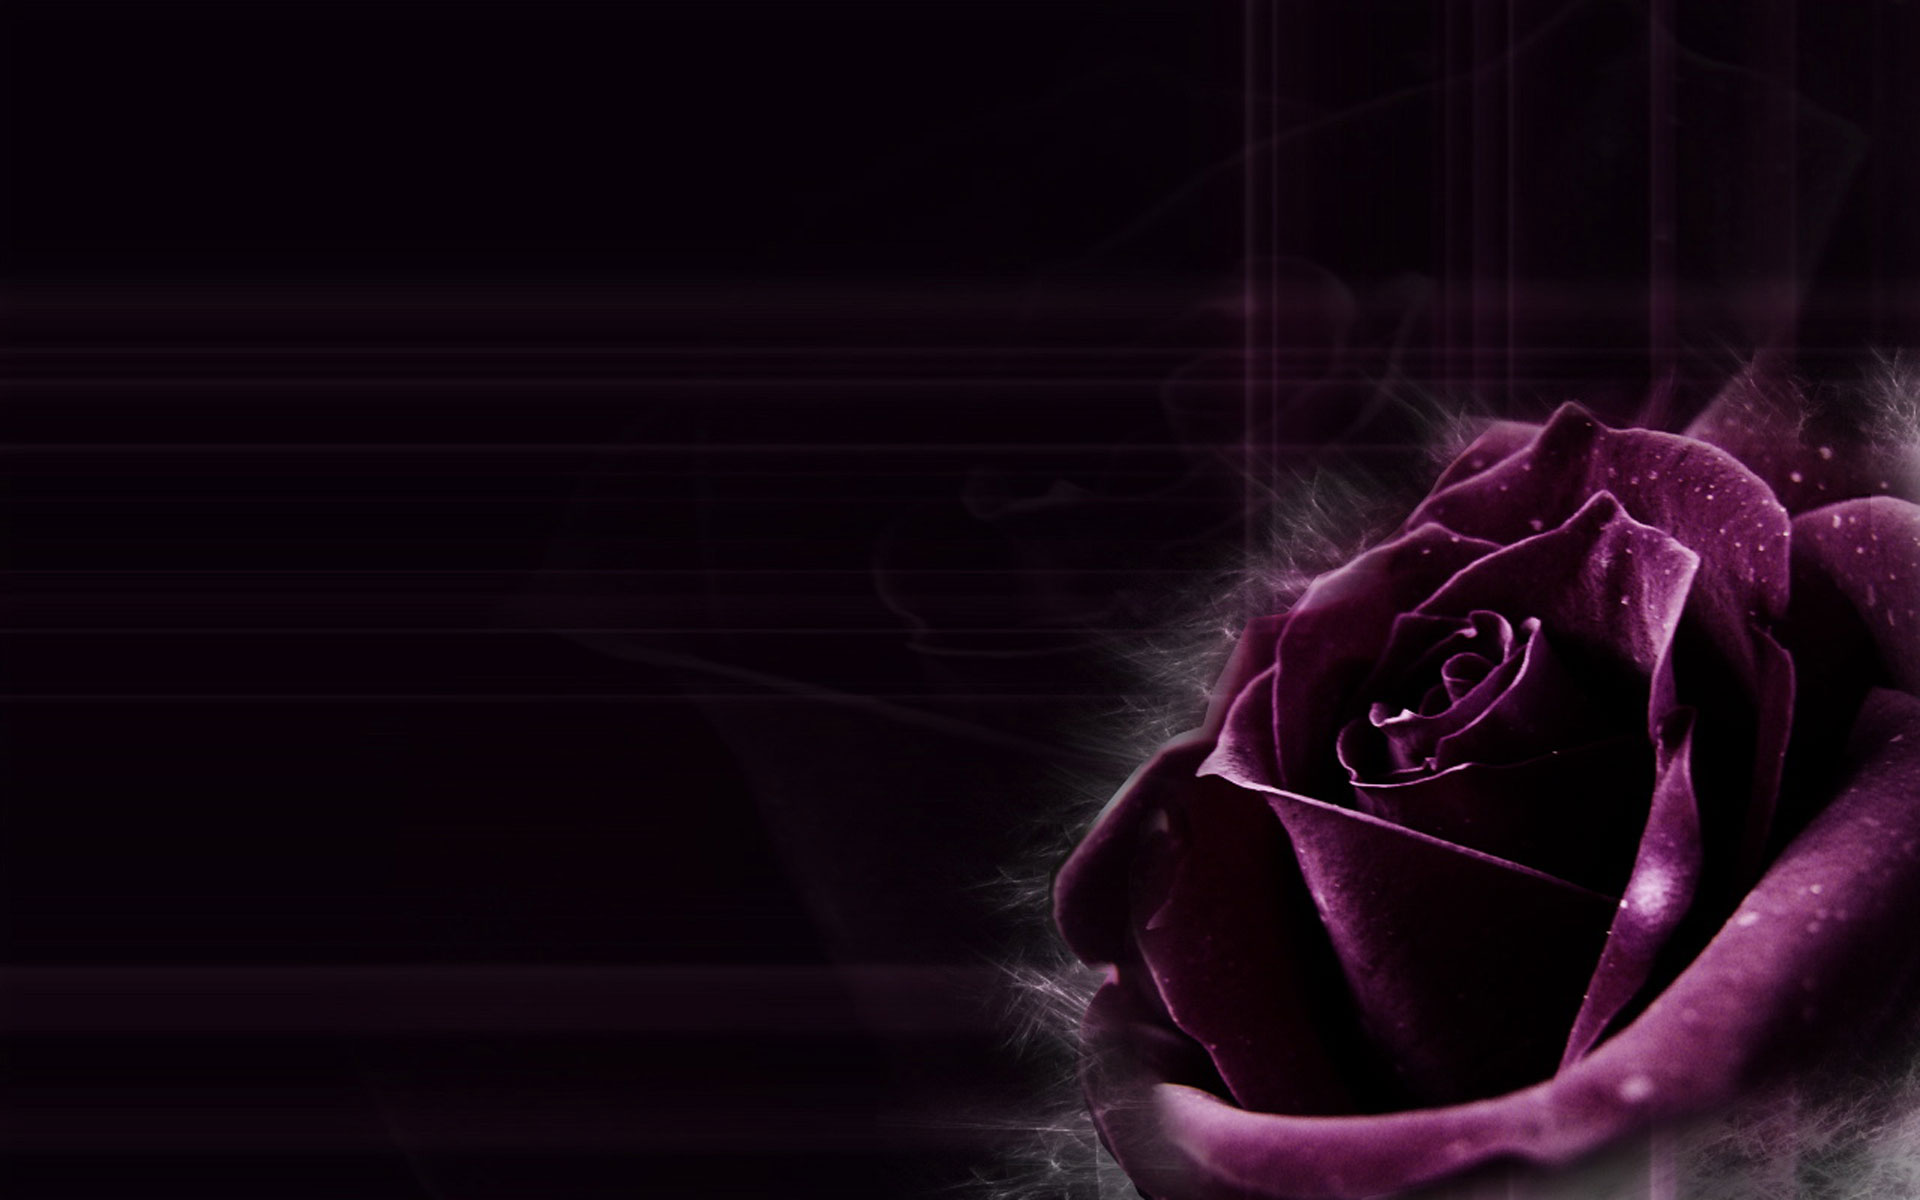  desktop background of dark purple rose the incense close up wallpaper 1920x1200